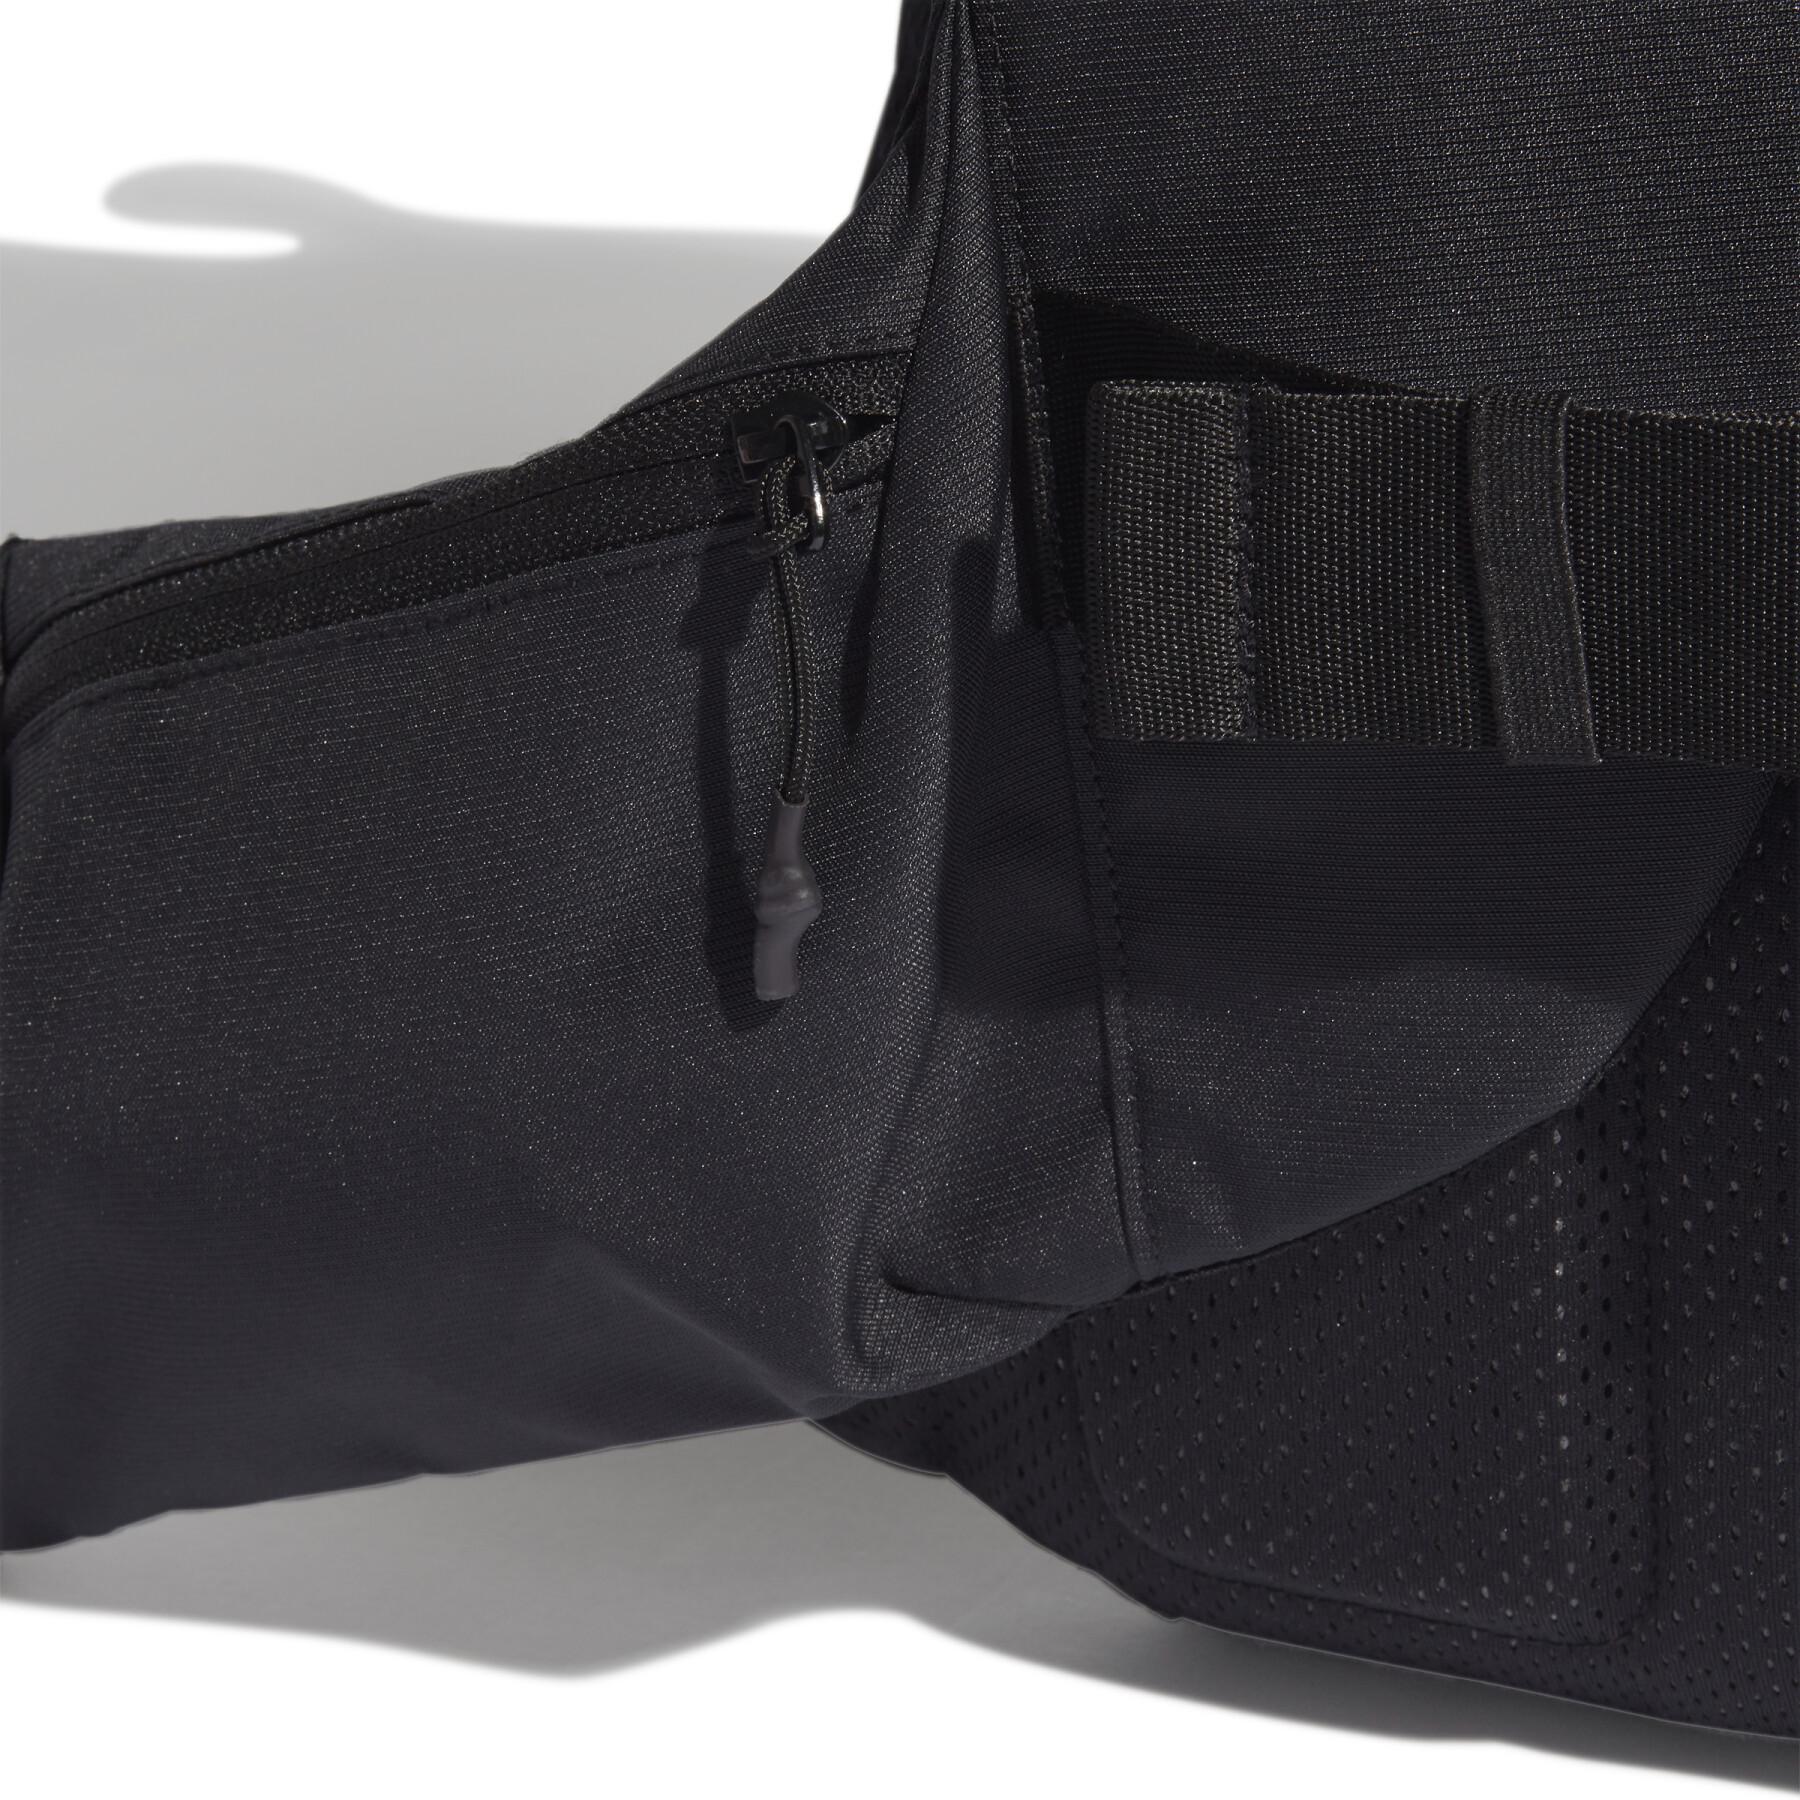 Backpack adidas Aeroready Hybrid